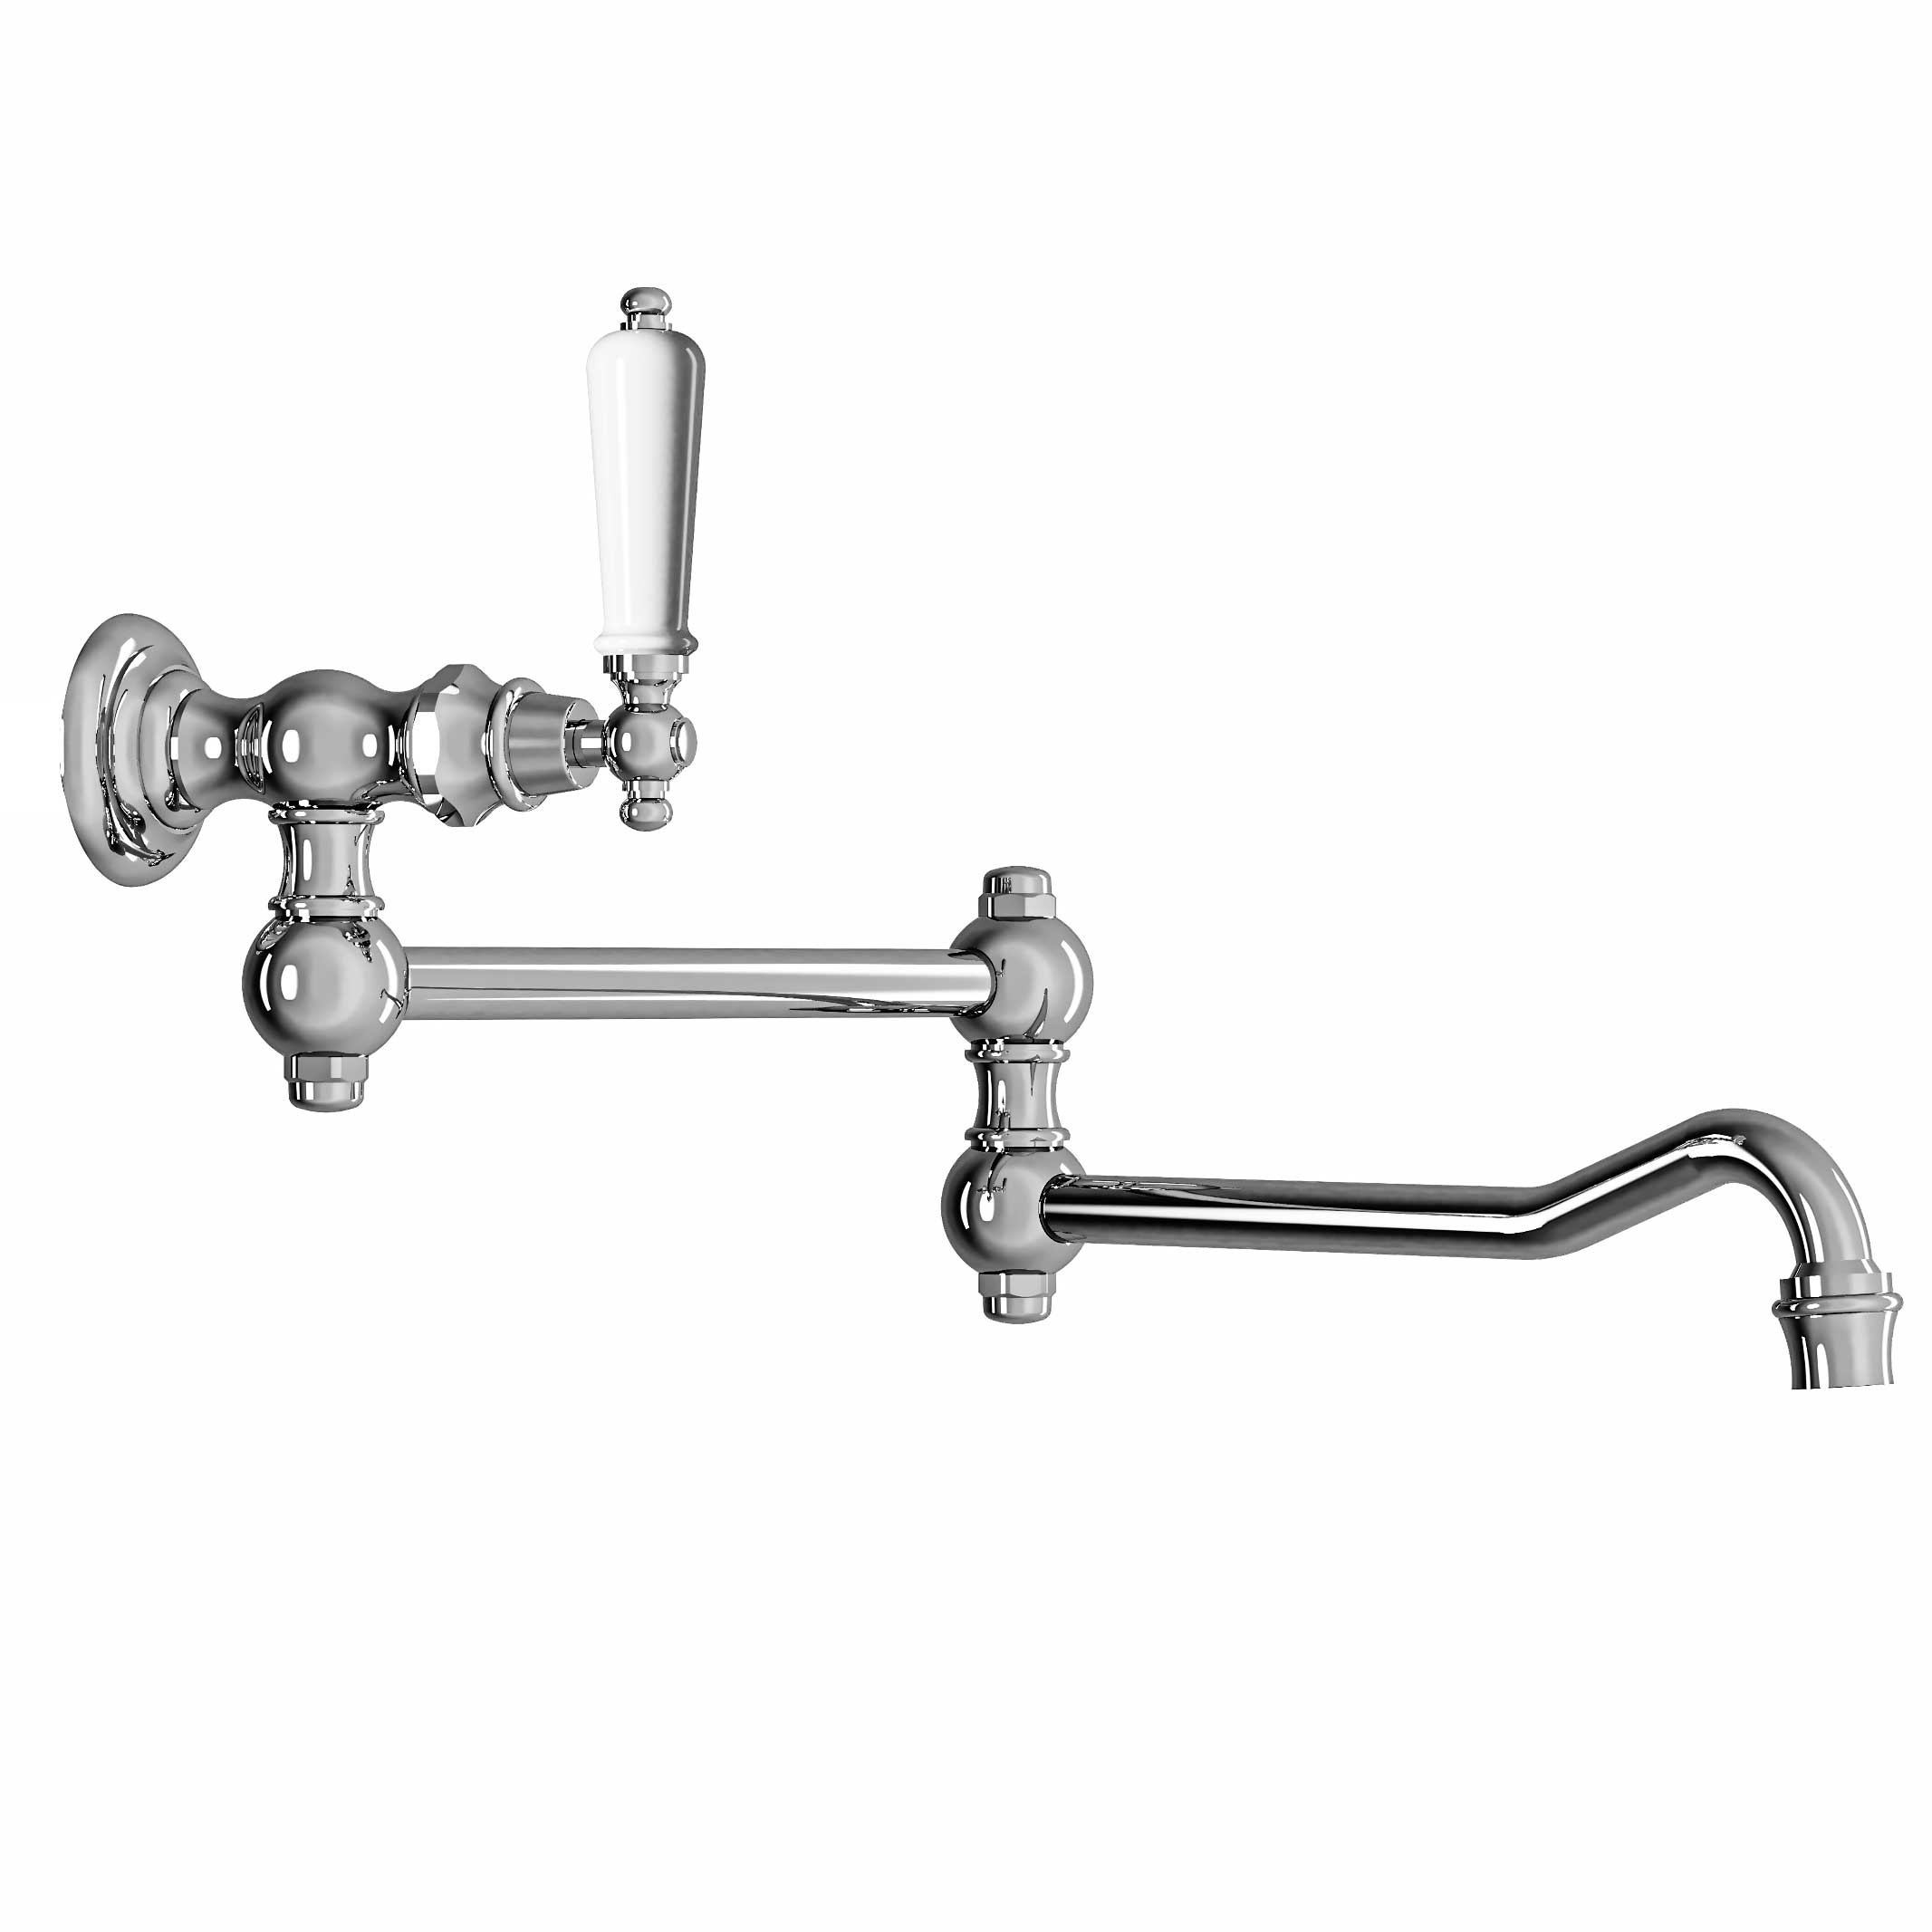 MK04-1PF1 “Pot-filler” tap